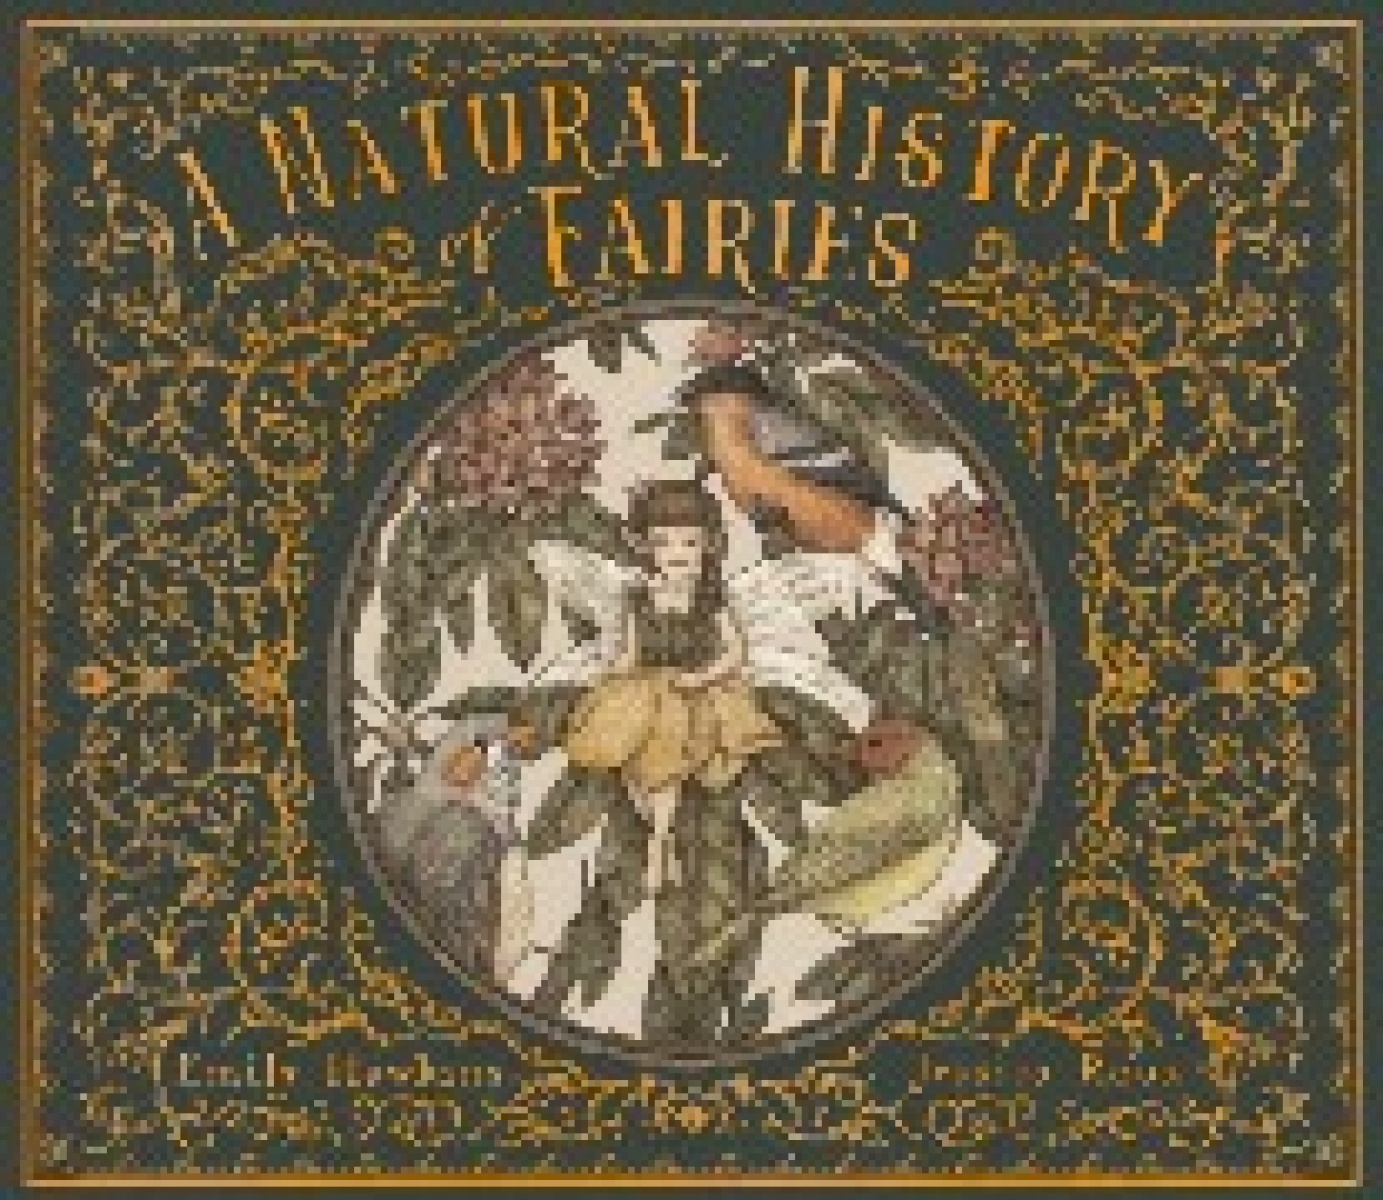 Emily, Hawkins Natural history of fairies 